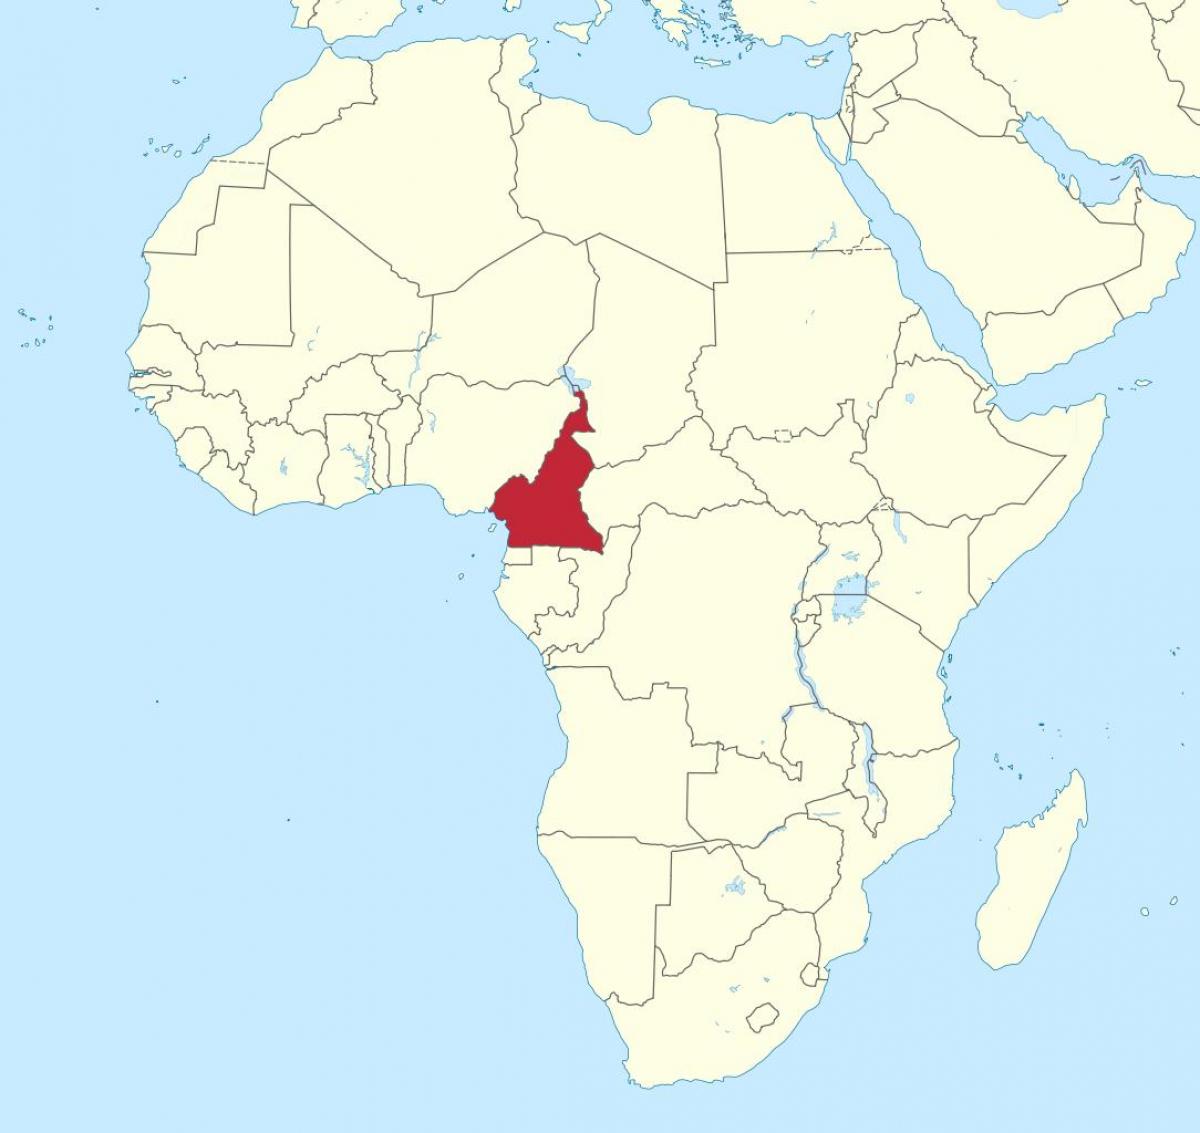 Mapa dos Camarões, áfrica ocidental